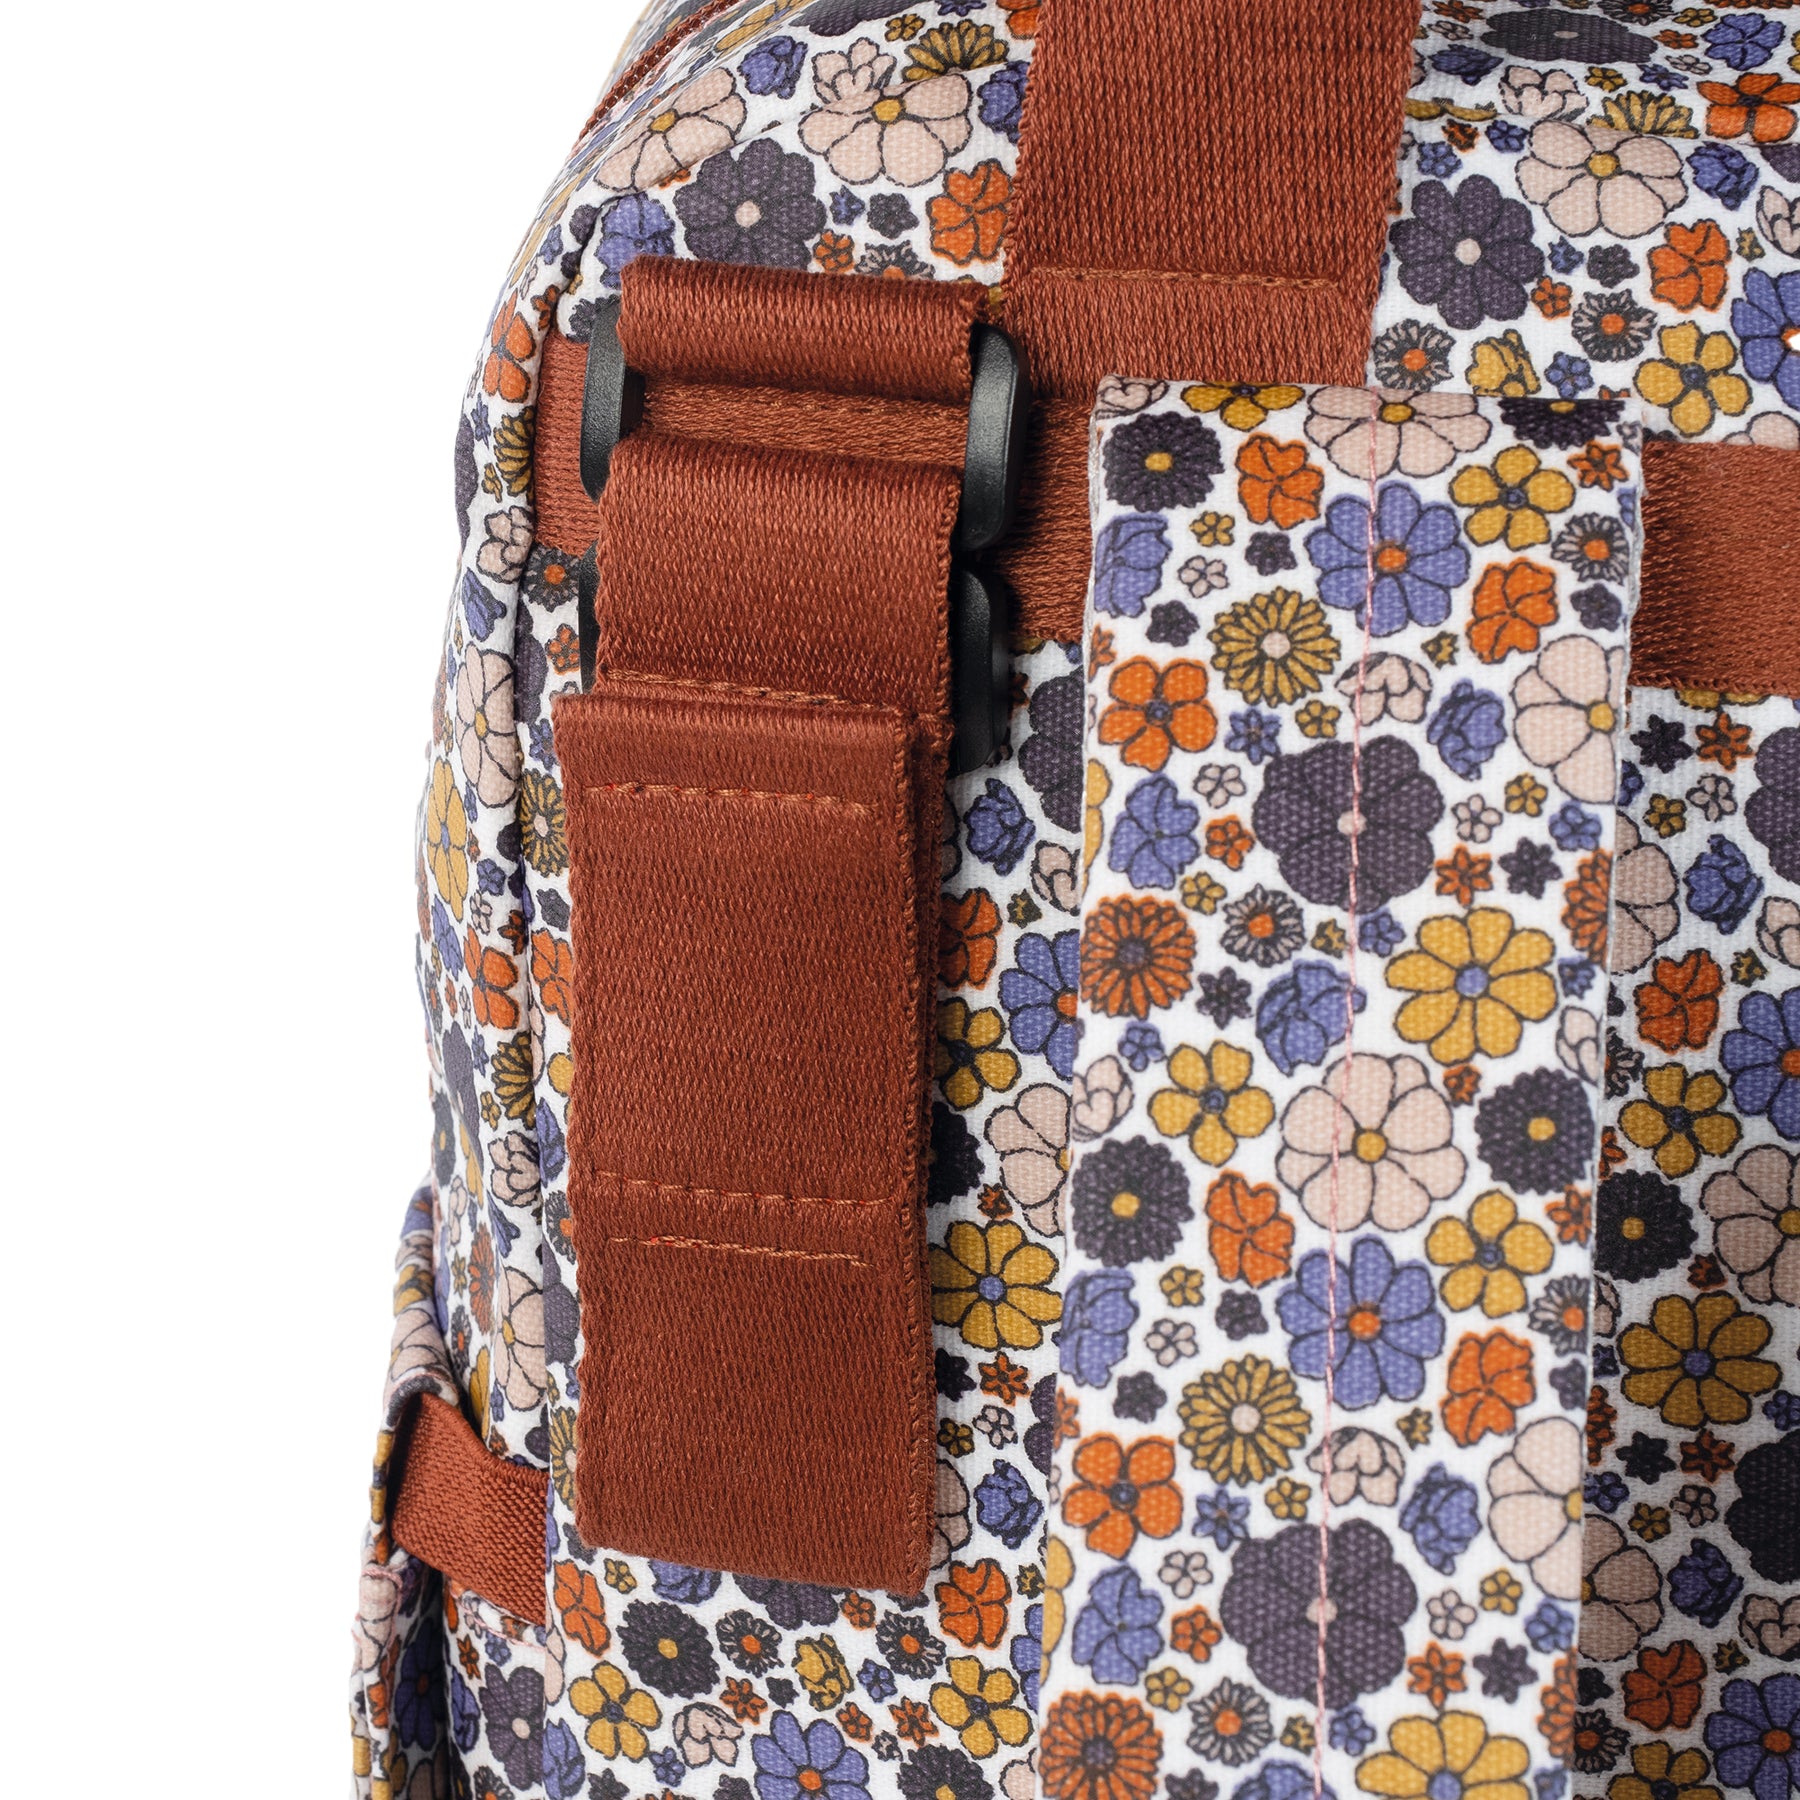 Walking Mum Camden Multicolor Backpack Diaper Changing Bag